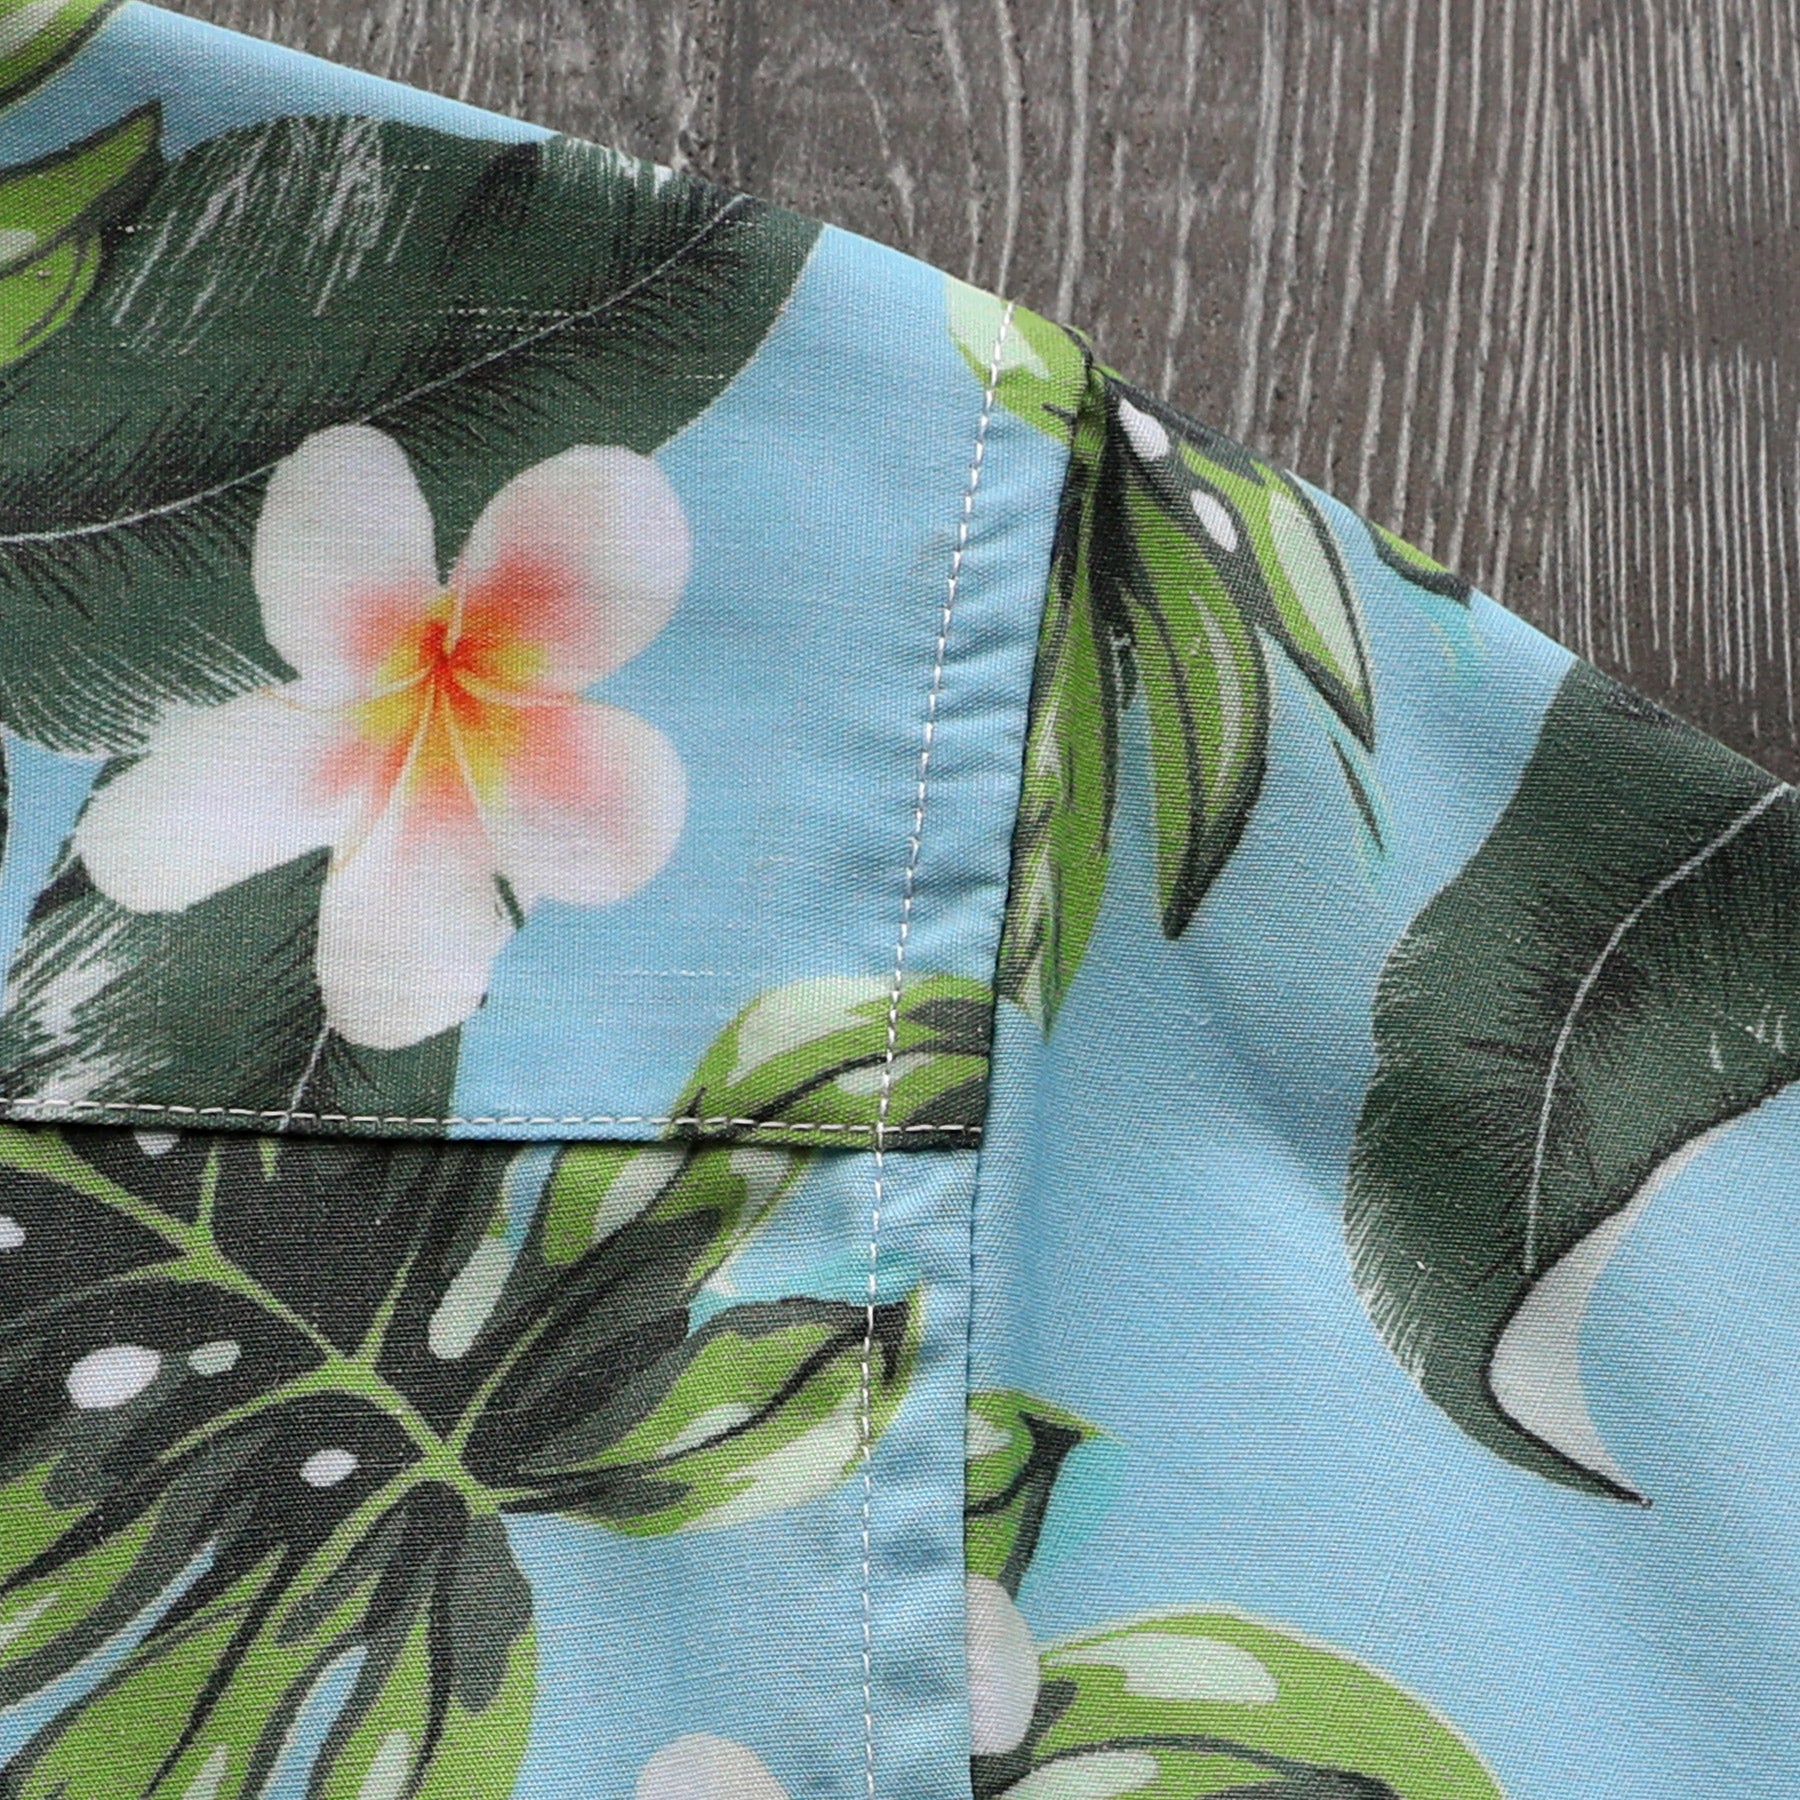 Hawaiian Shirt for Men Aloha Tropical Short Sleeve Button Down Print Beach Shirts #2624